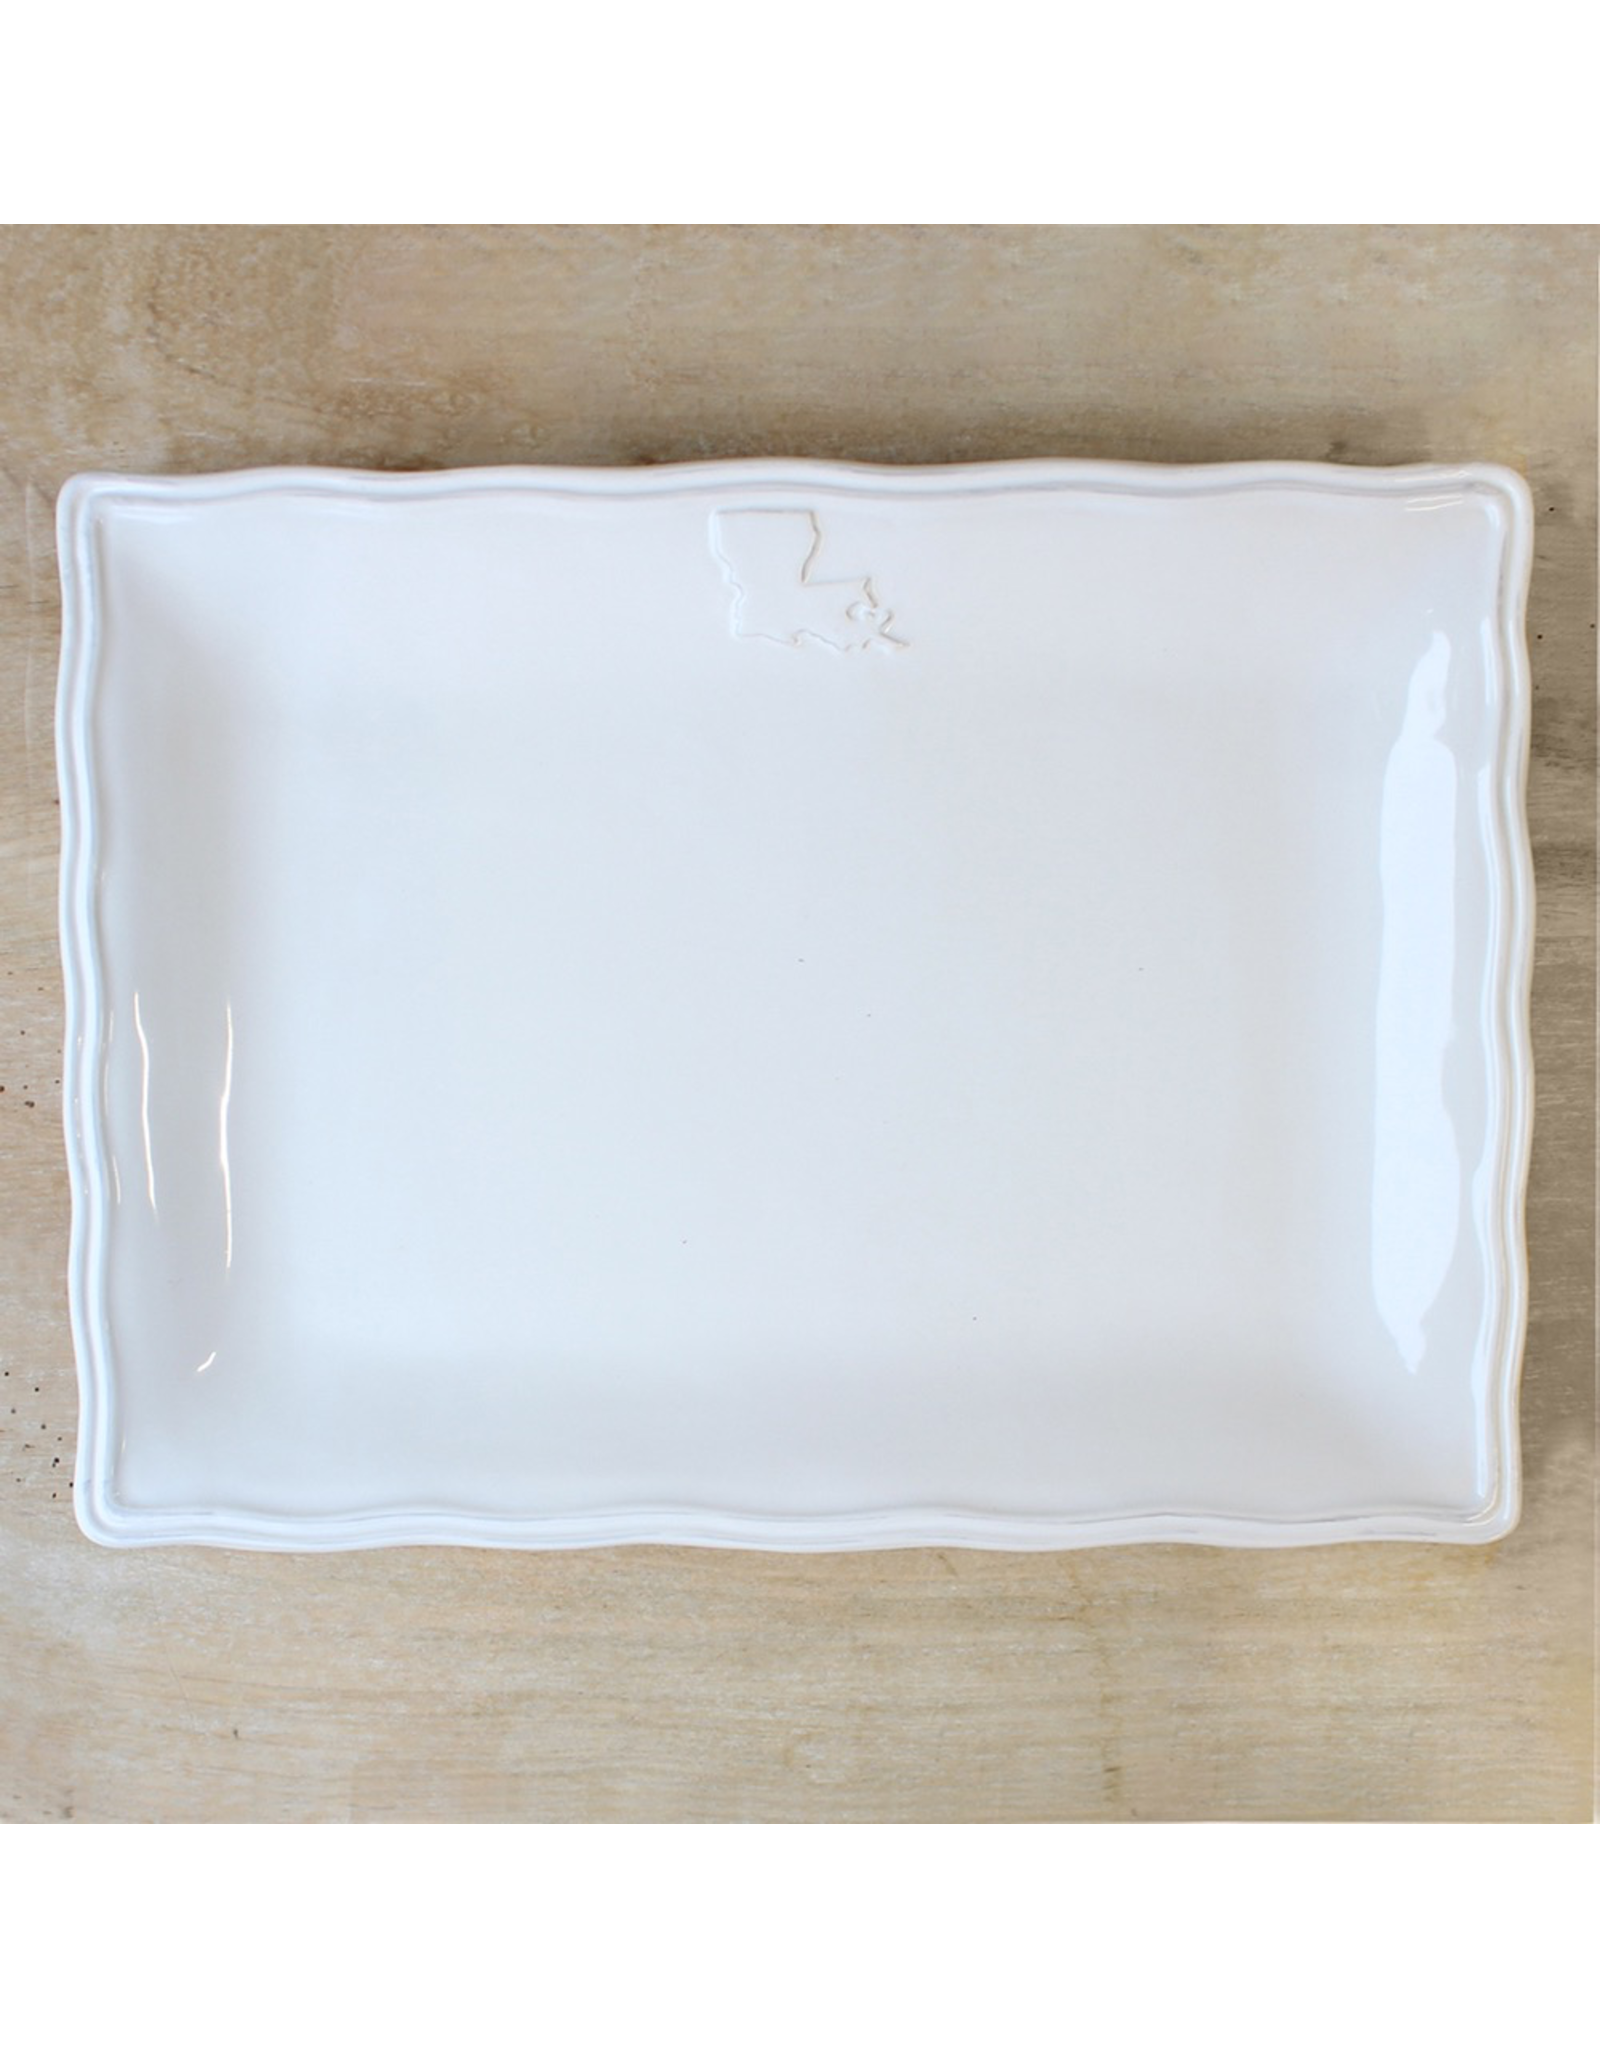 The Royal Standard Louisiana Platter 11.5x8.5